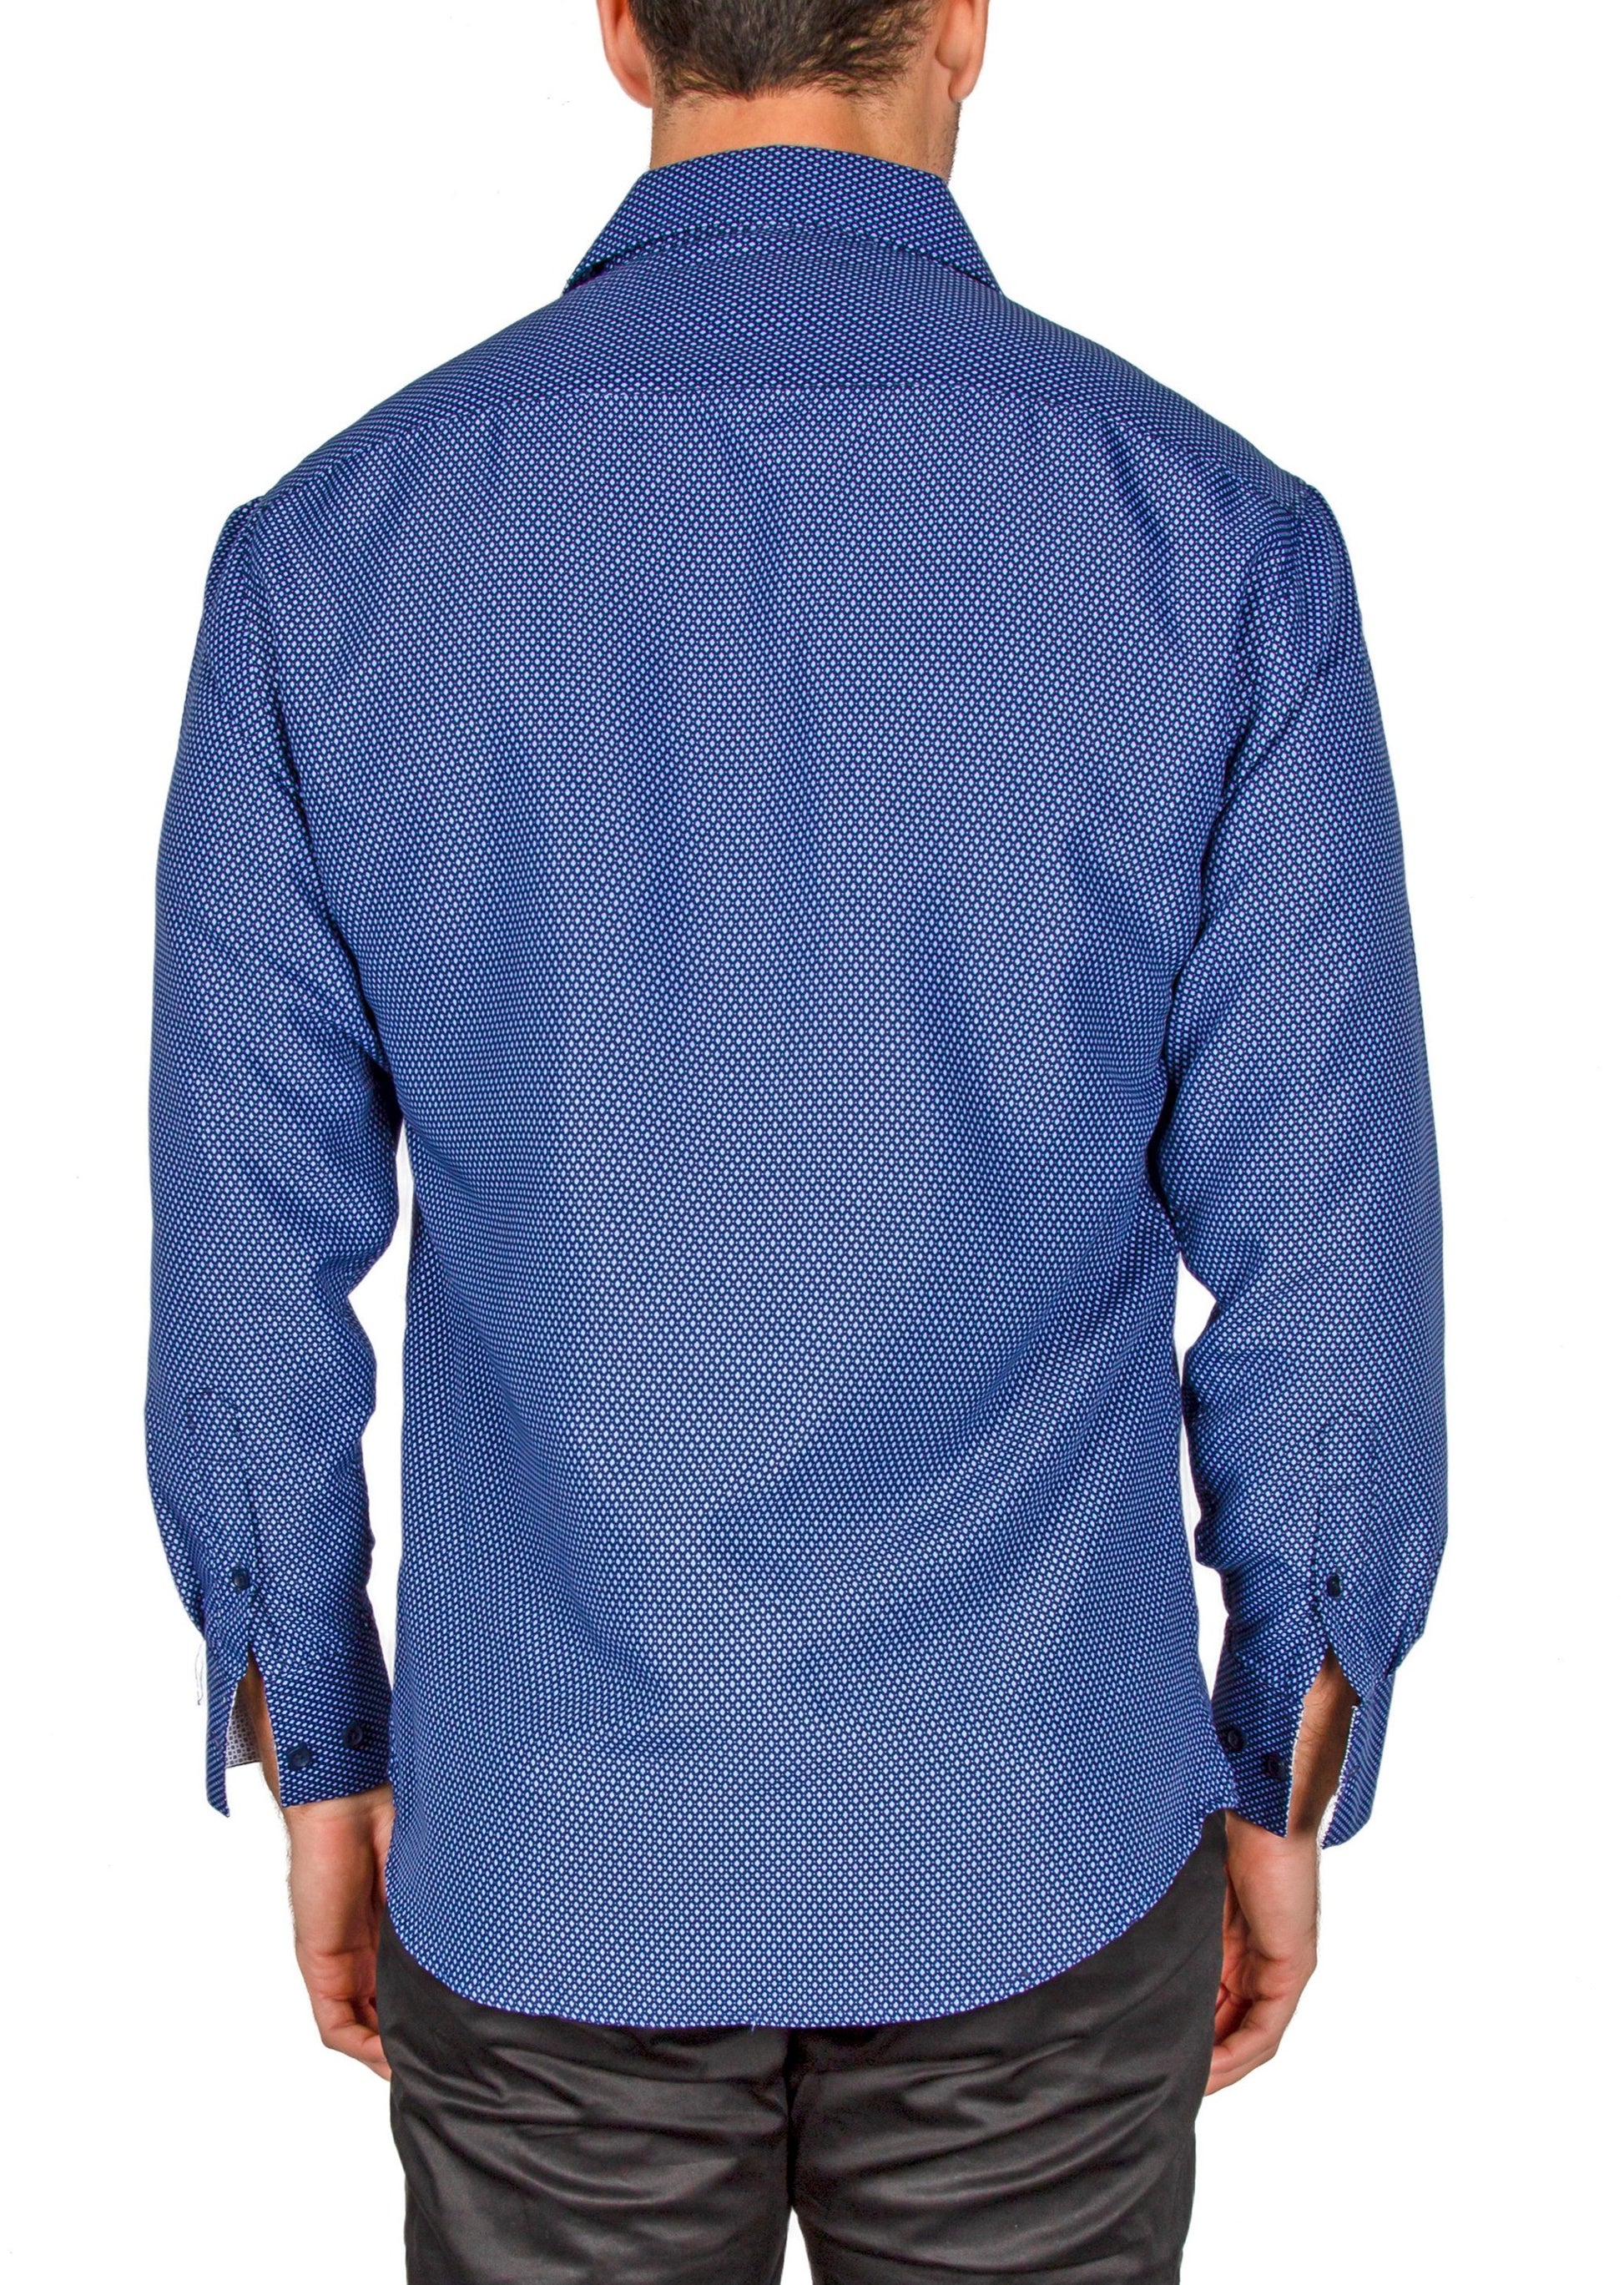 bc-182357-mens-navy-button-up-long-sleeve-dress-shirt